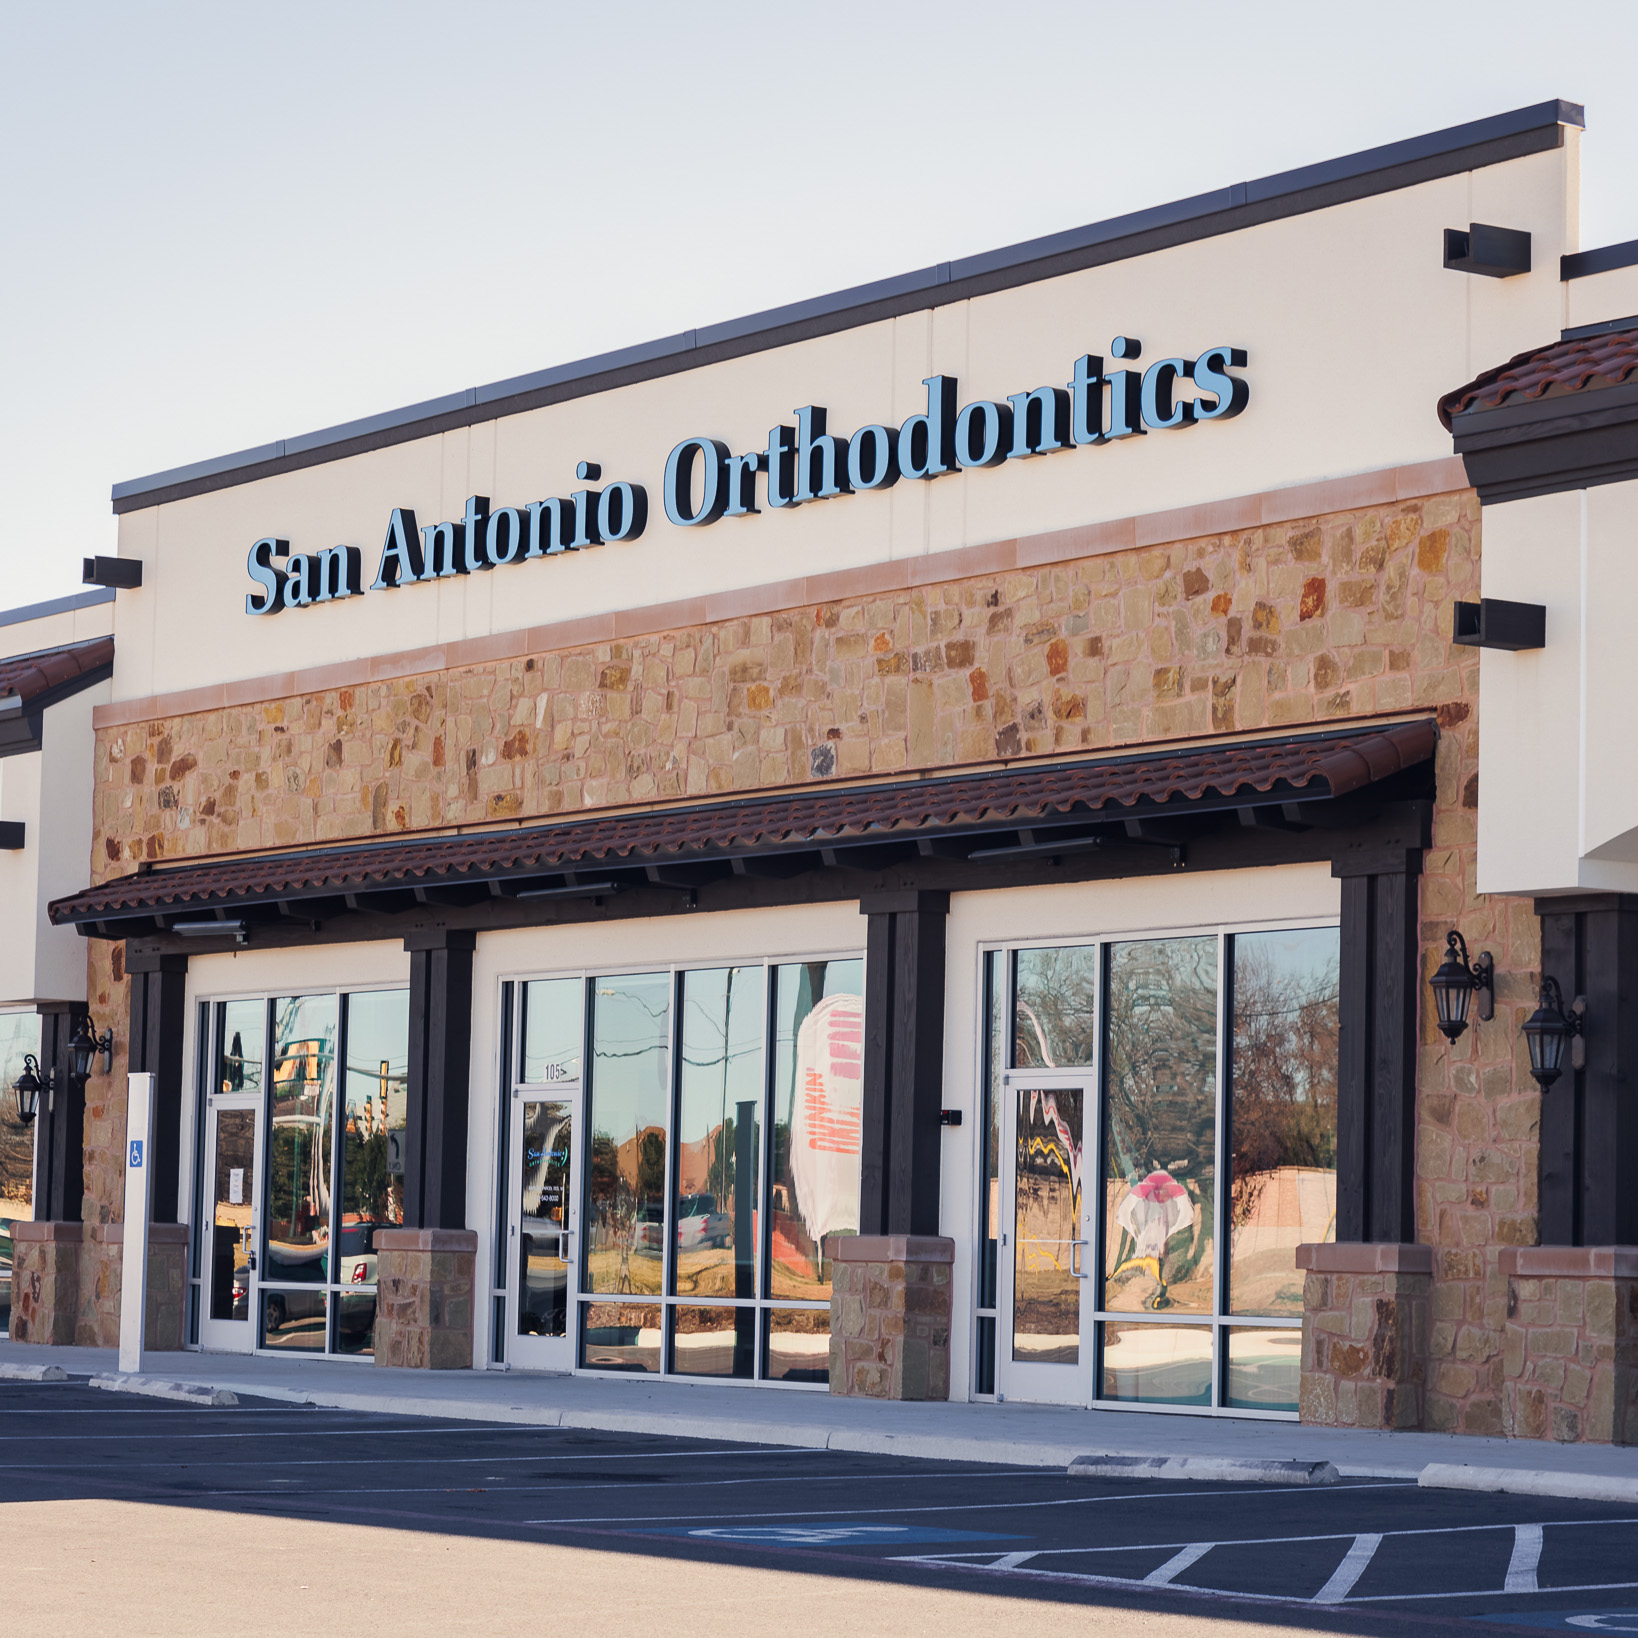 San Antonio Orthodontics!